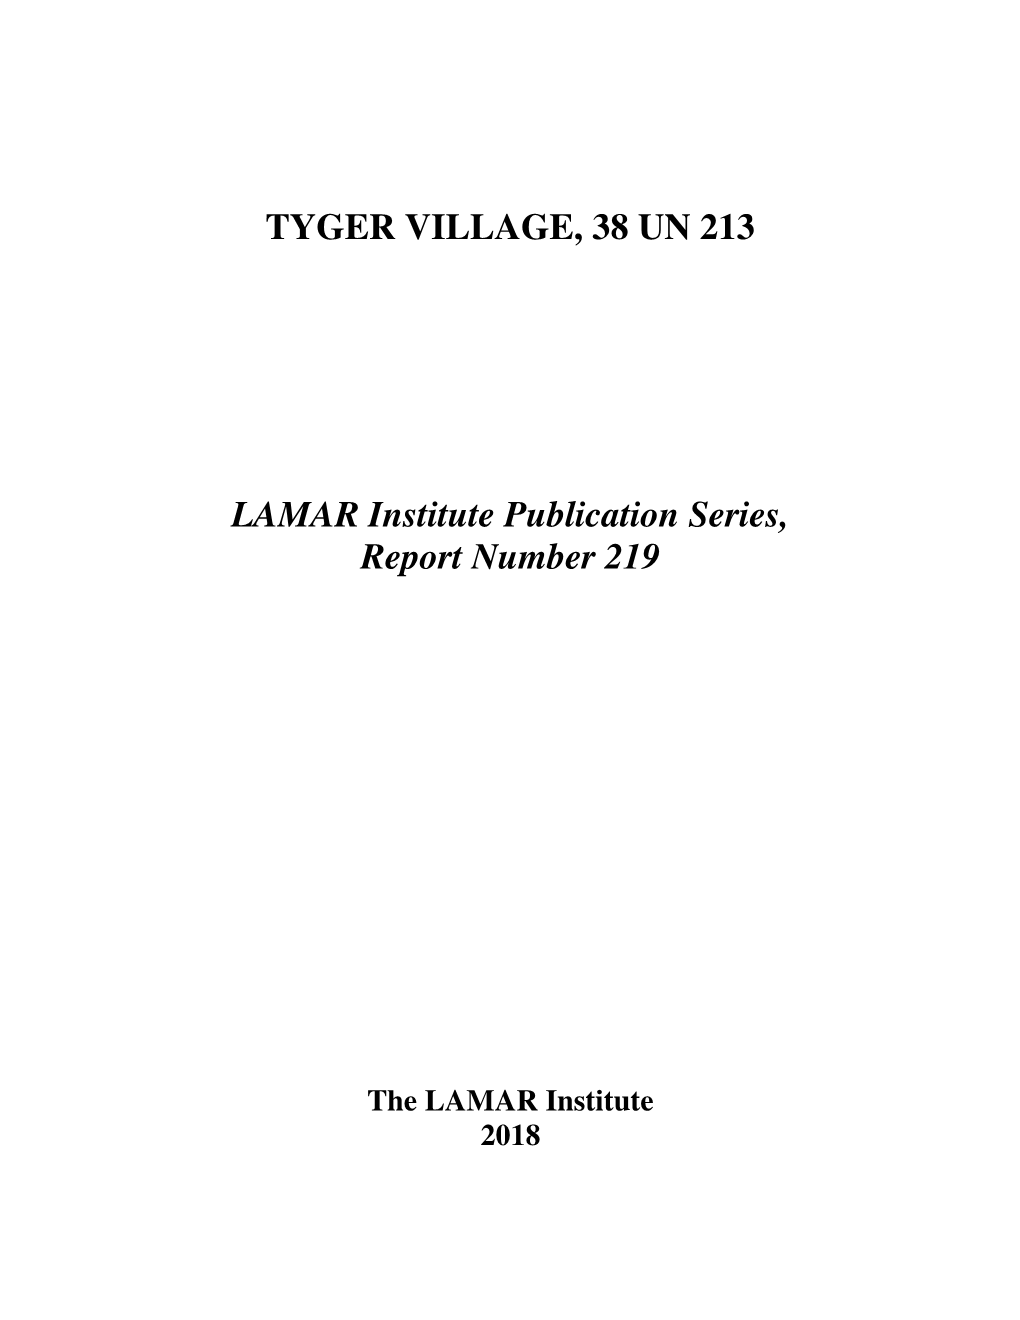 TYGER VILLAGE, 38 UN 213 LAMAR Institute Publication Series, Report